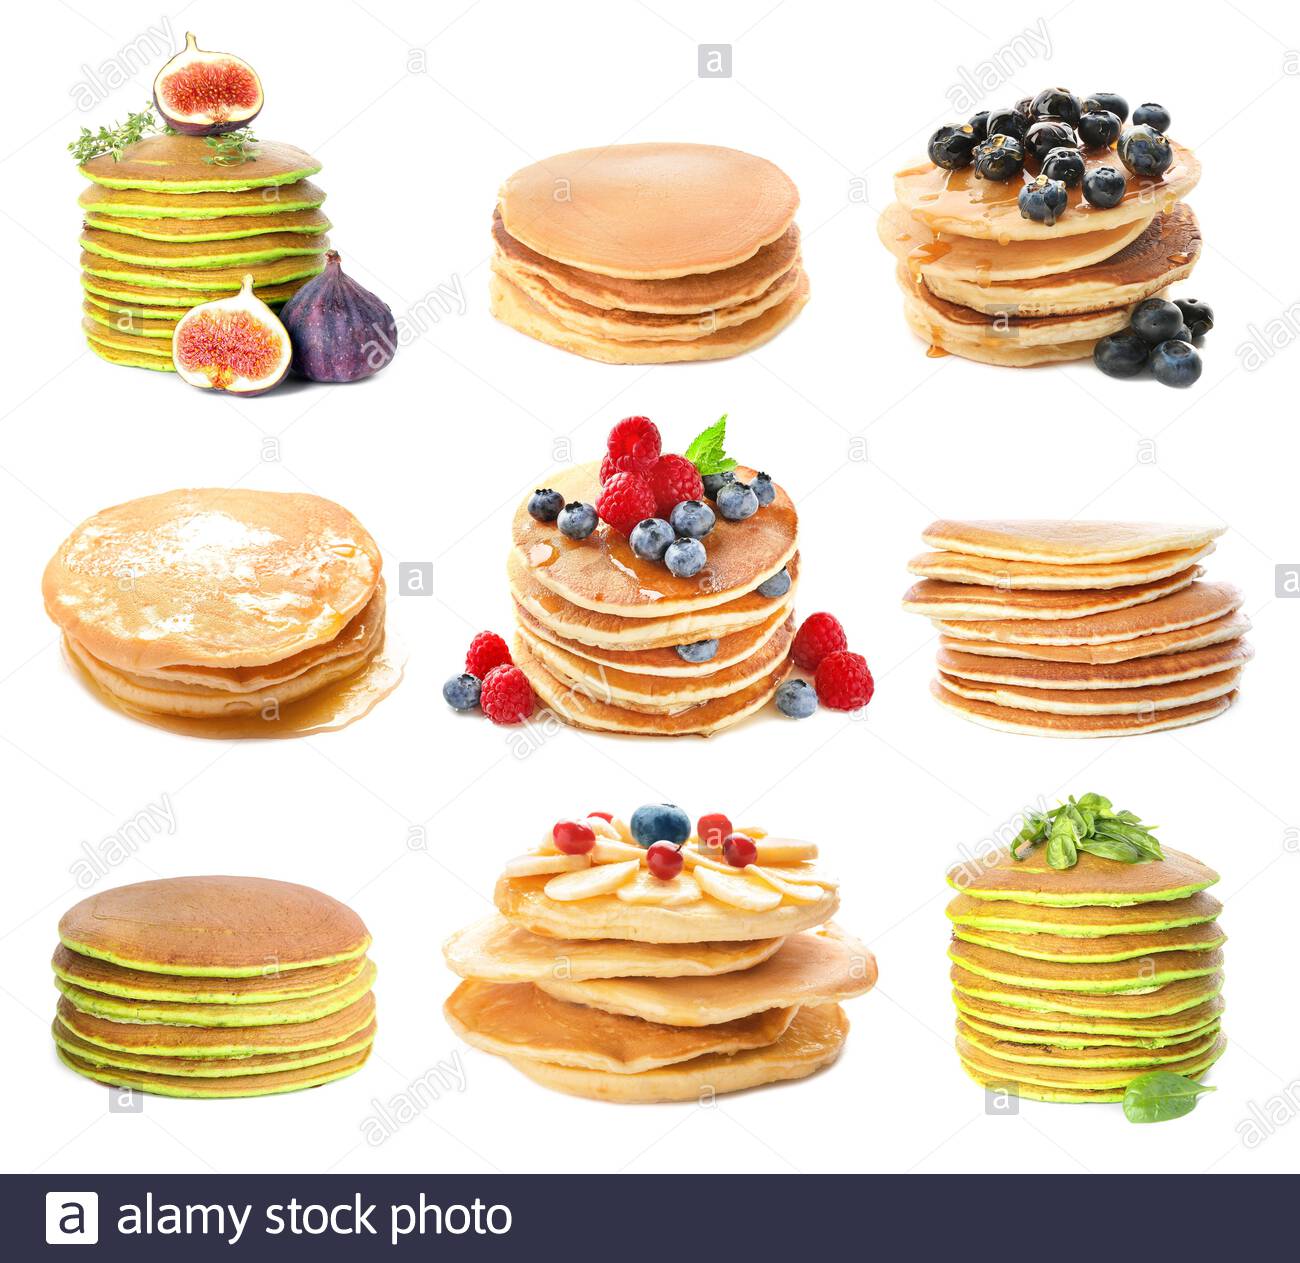 Set With Tasty Pancakes On White Background Stock Photo